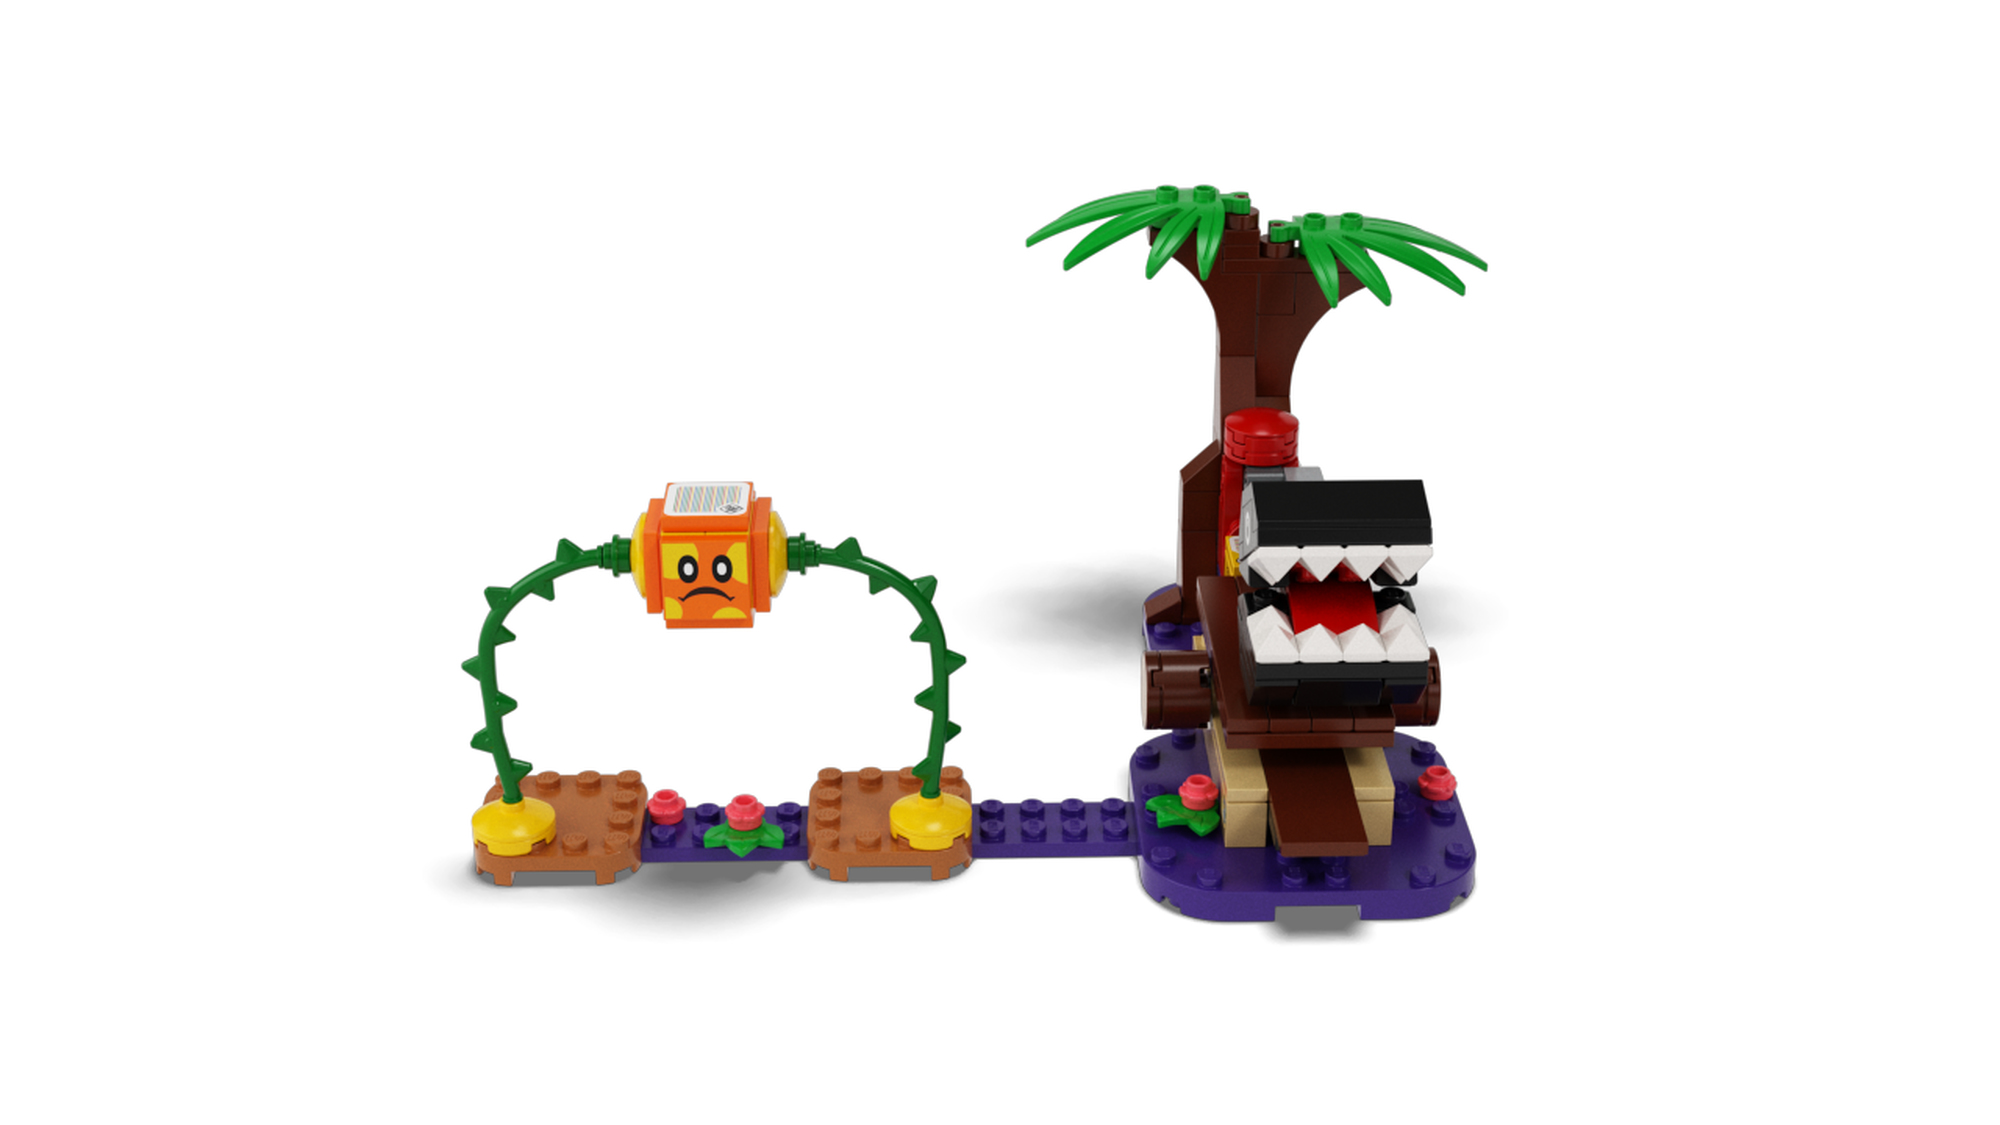  LEGO Super Mario Chain Chomp Jungle Encounter